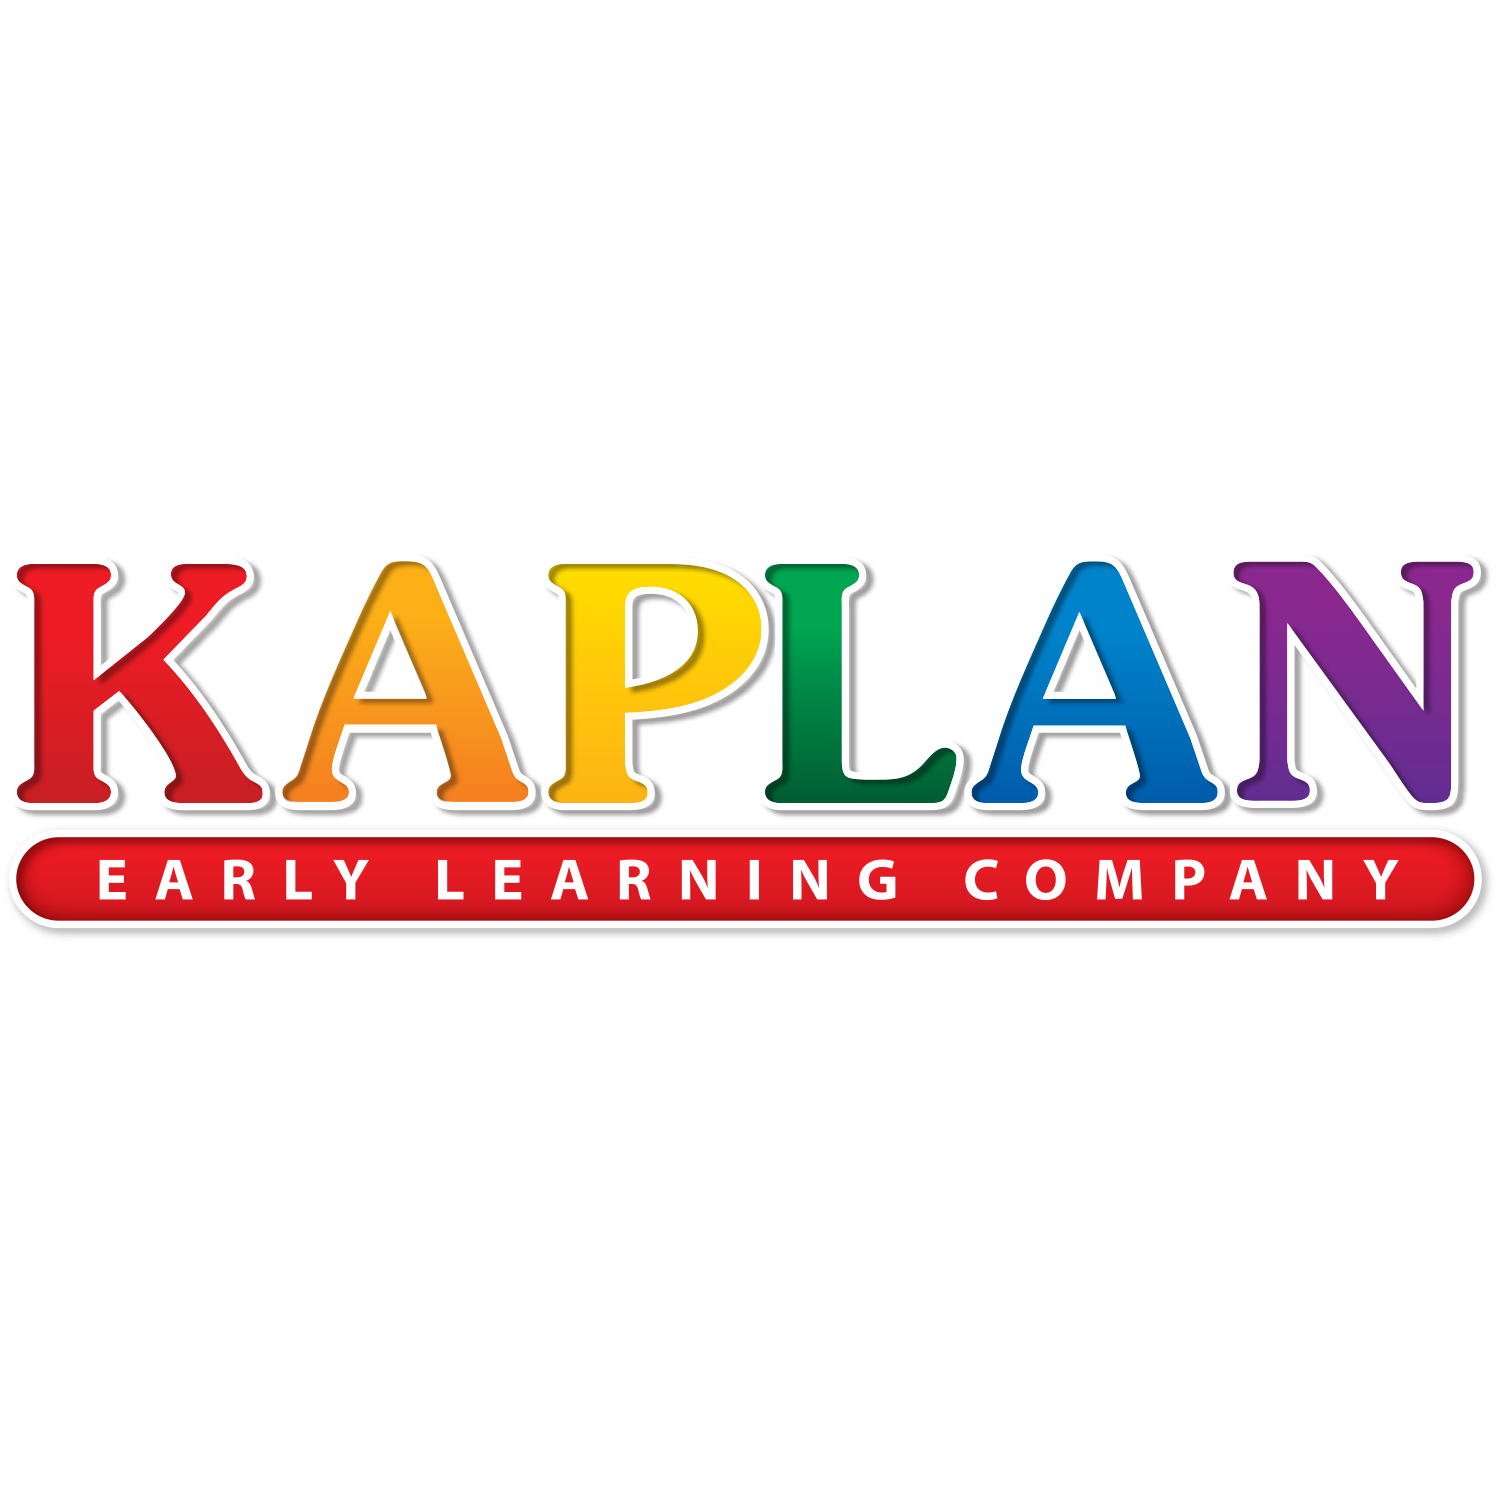 KAPLAN Early Learning Company